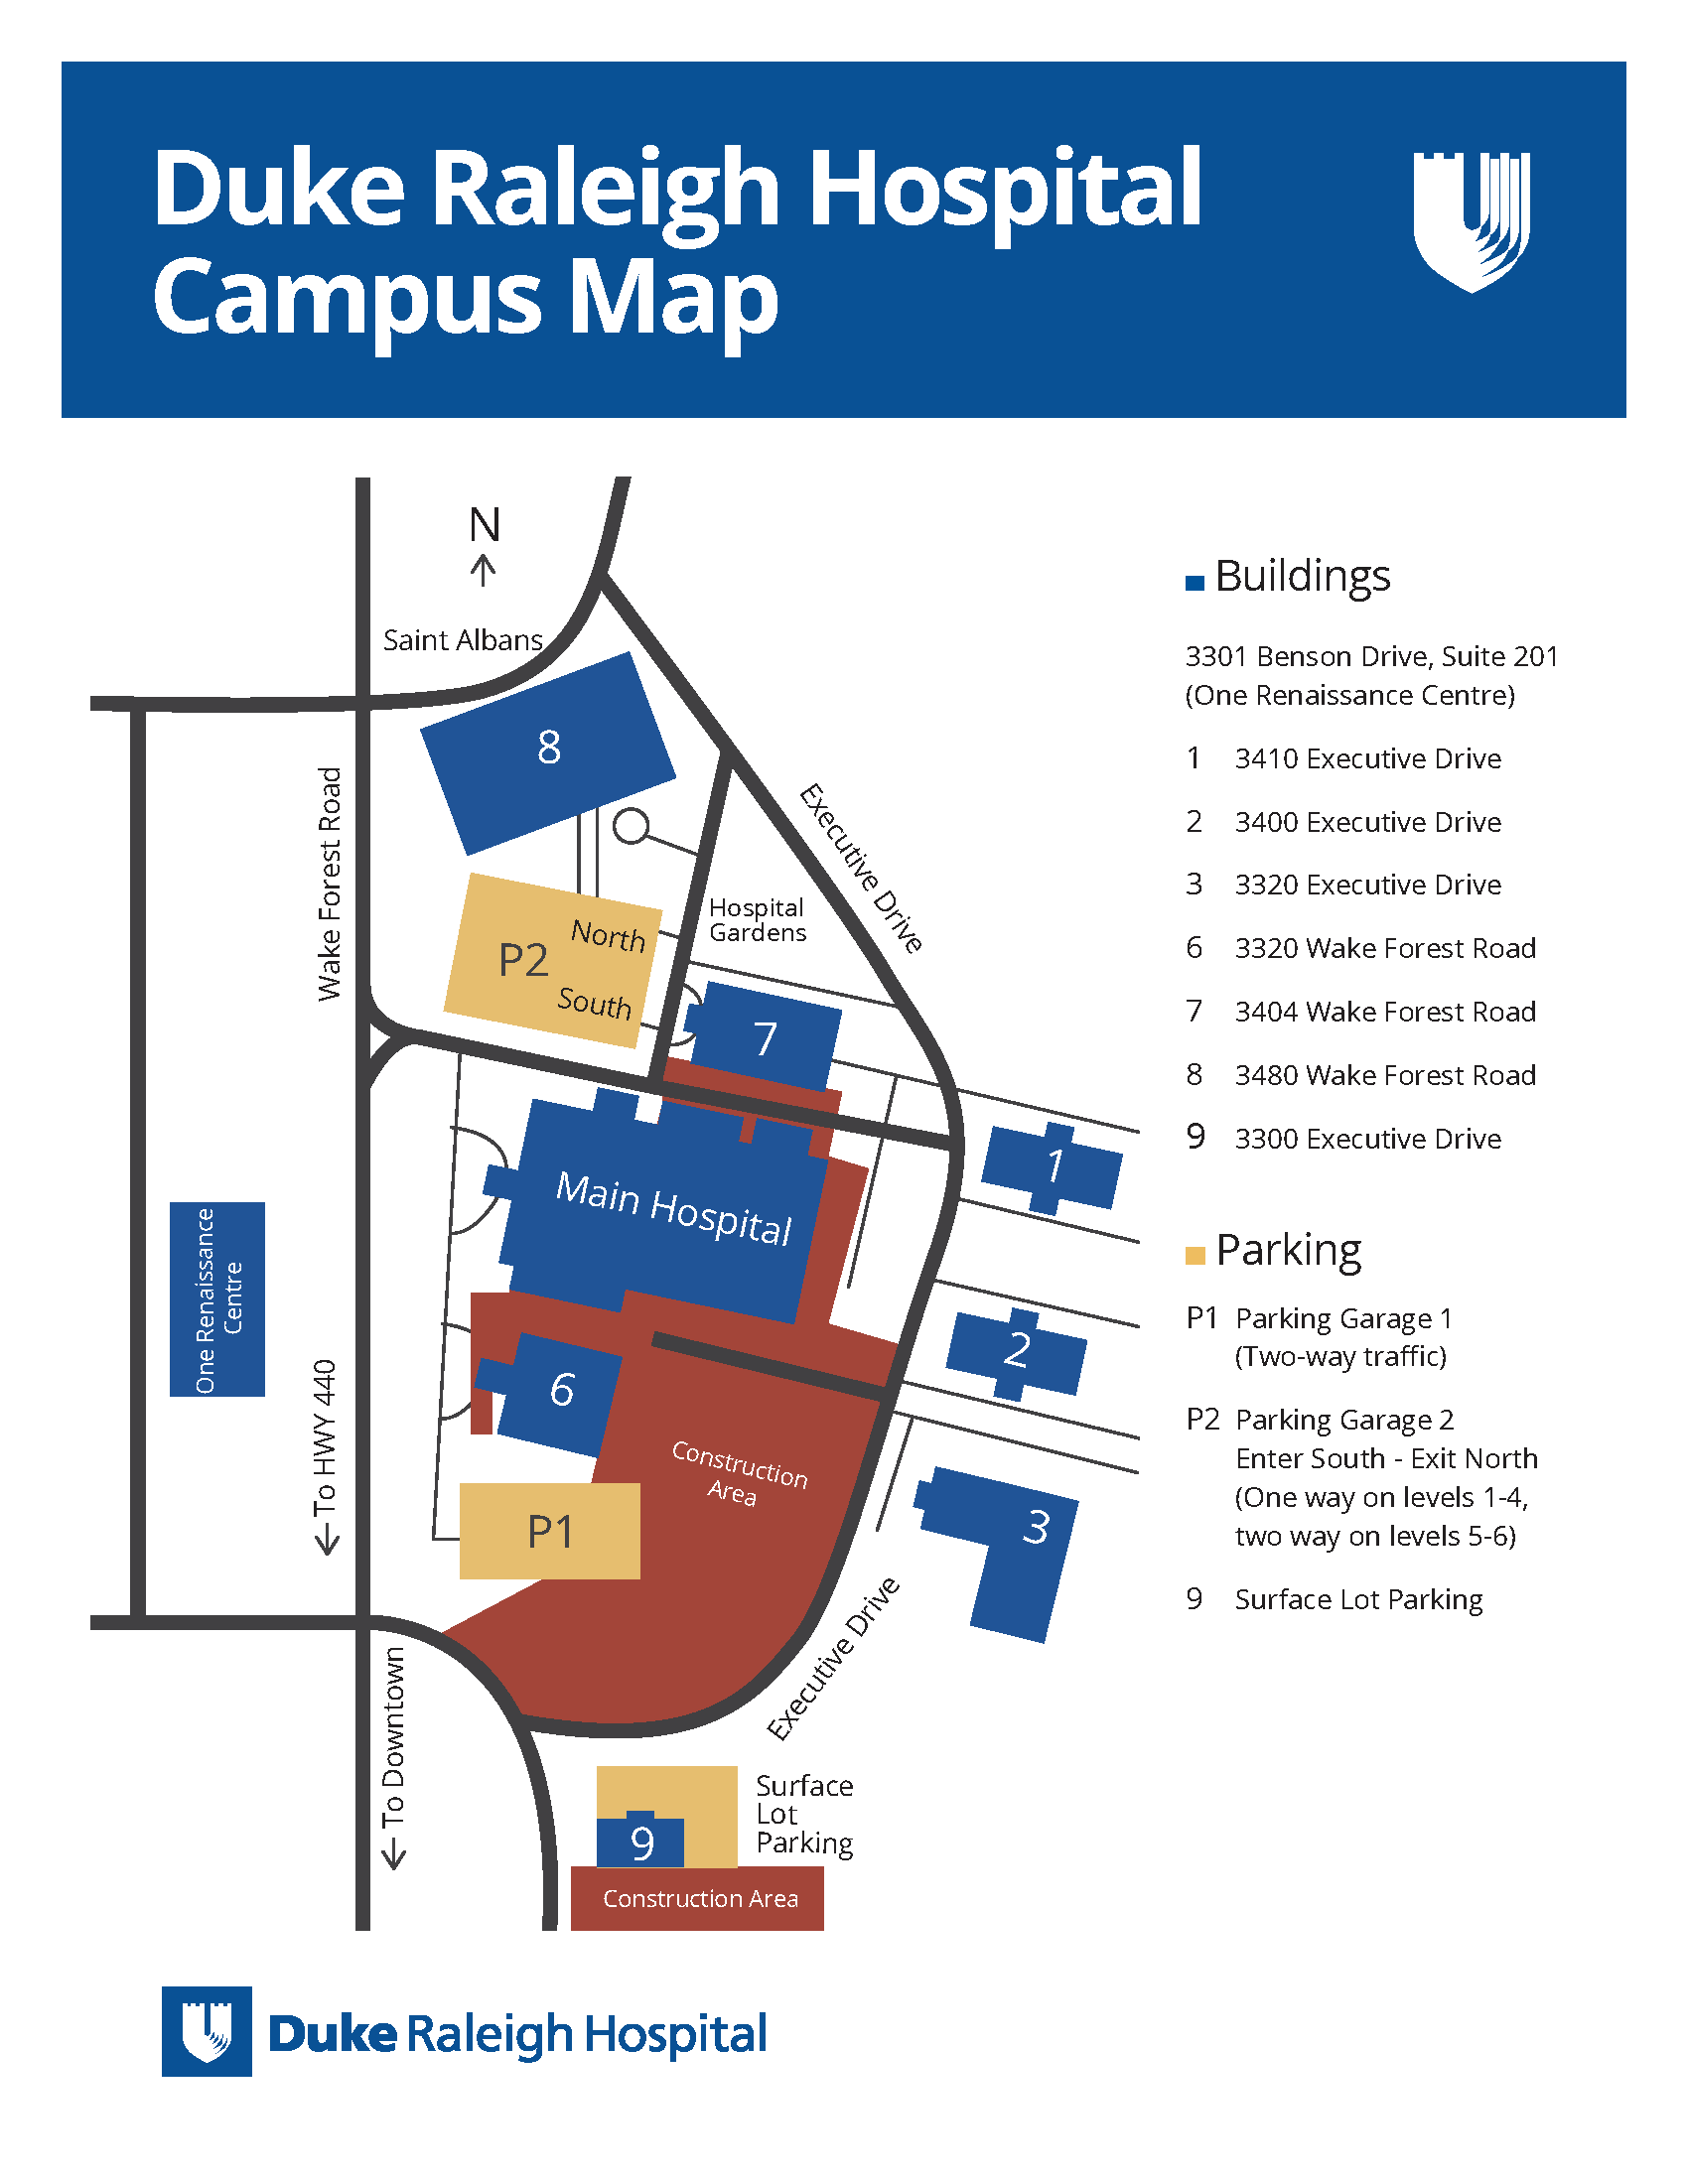 Duke Raleigh Hospital Campus Map Mob6 10 18 19 0 